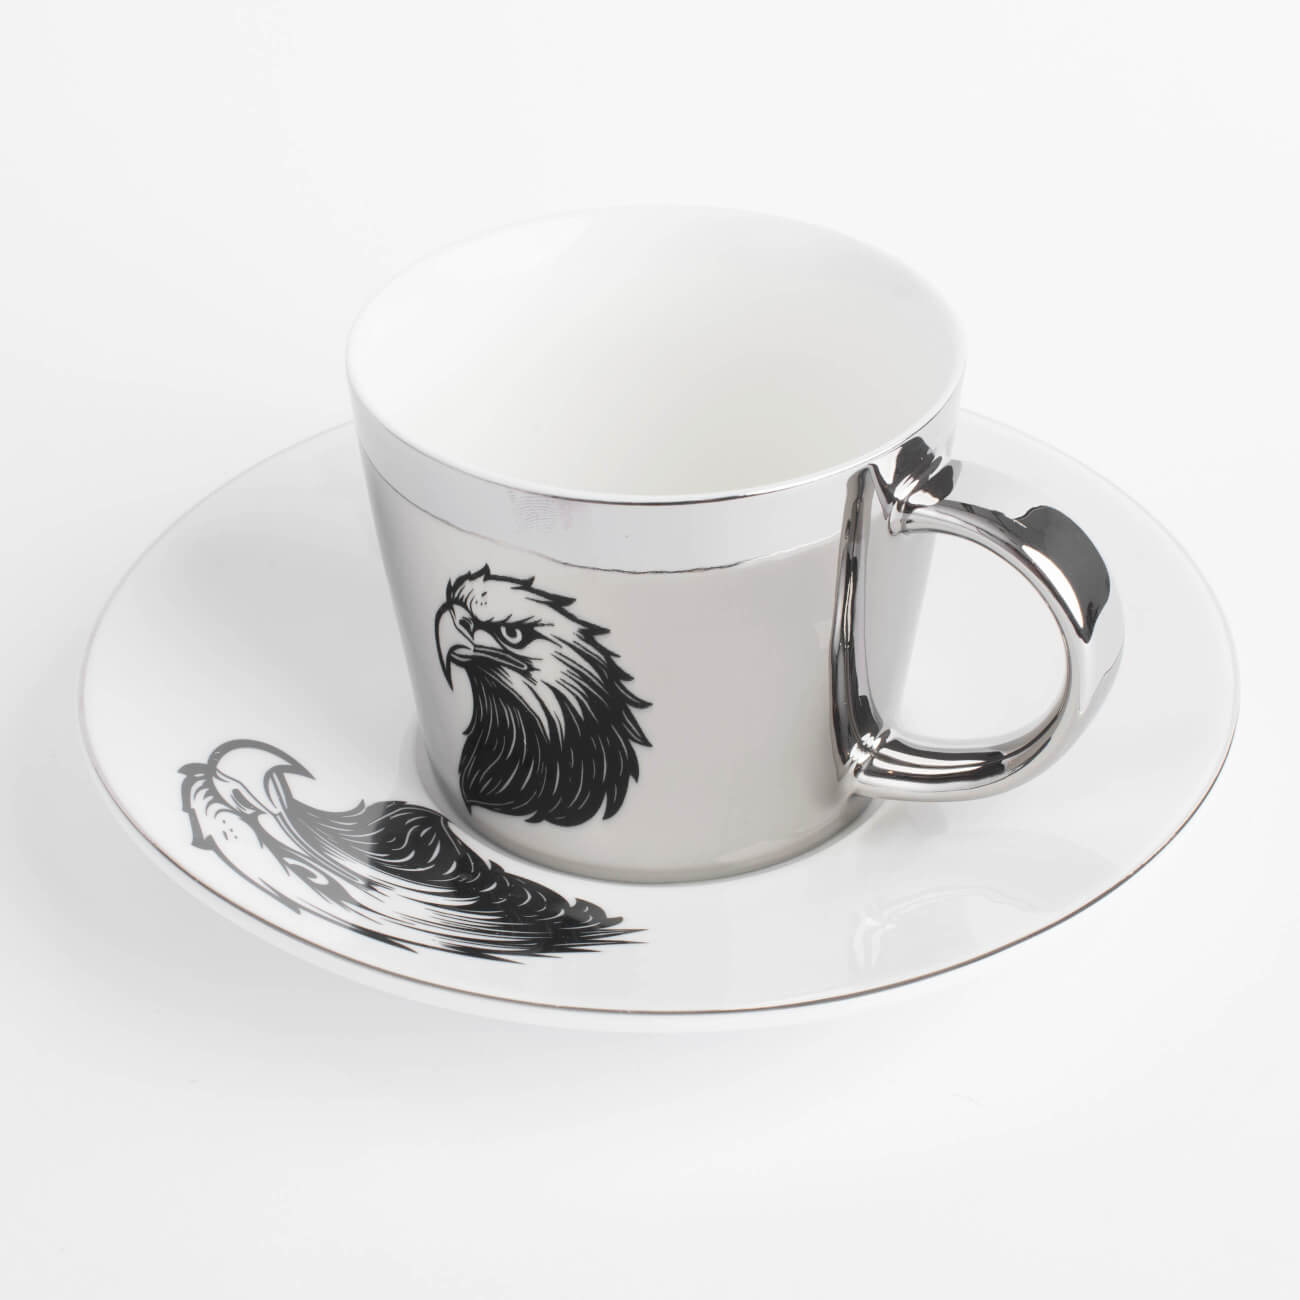 Пара чайная, 1 перс, 2 пр, 230 мл, фарфор P, бело-серебристая, Орел, Eagle - фото 1